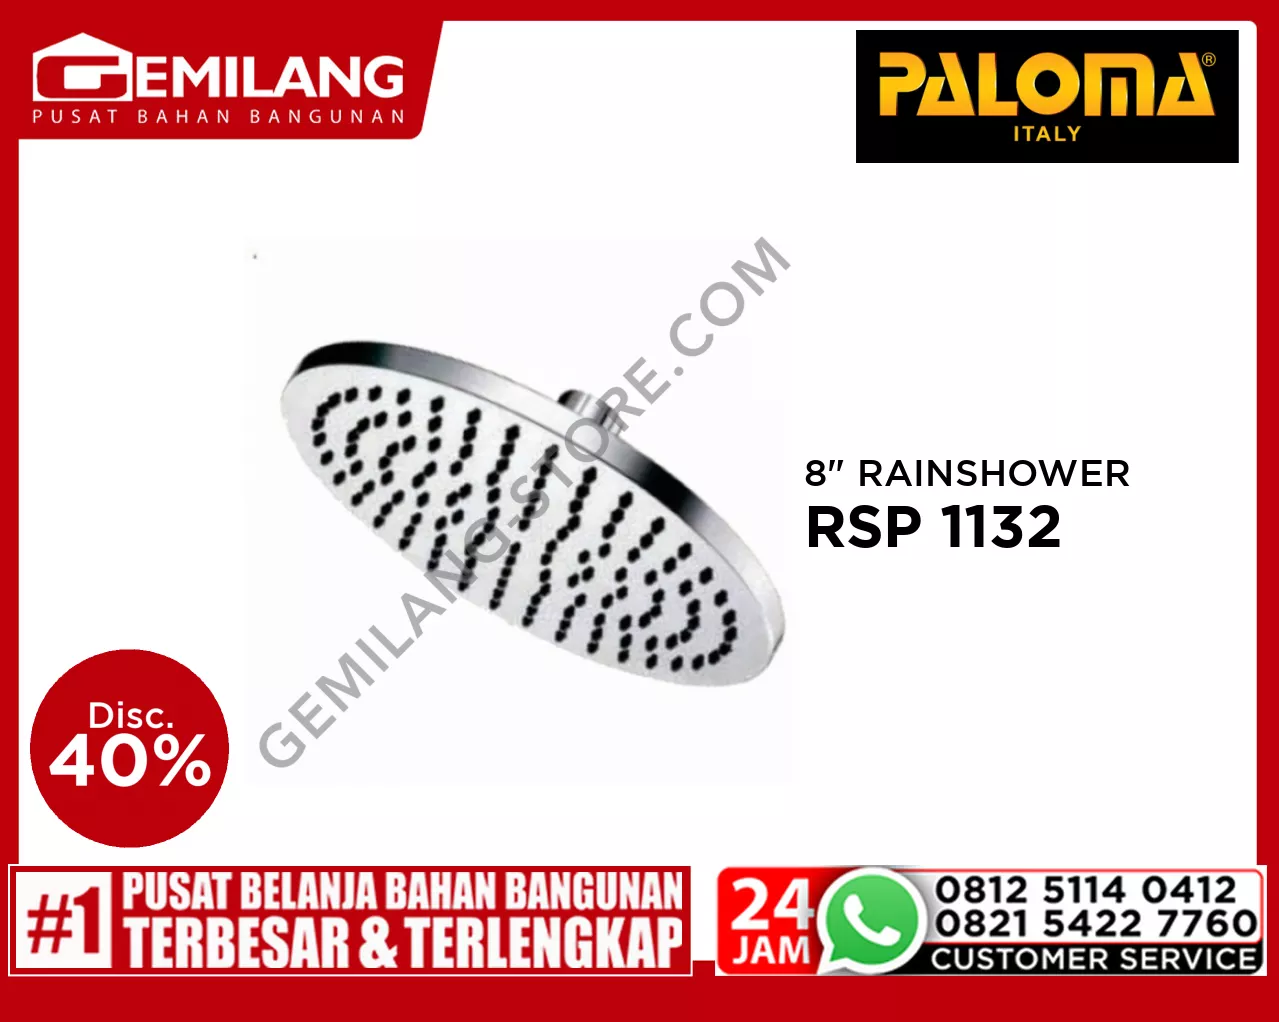 PALOMA 8inch RAINSHOWER ROUND CHROME RSP 1132